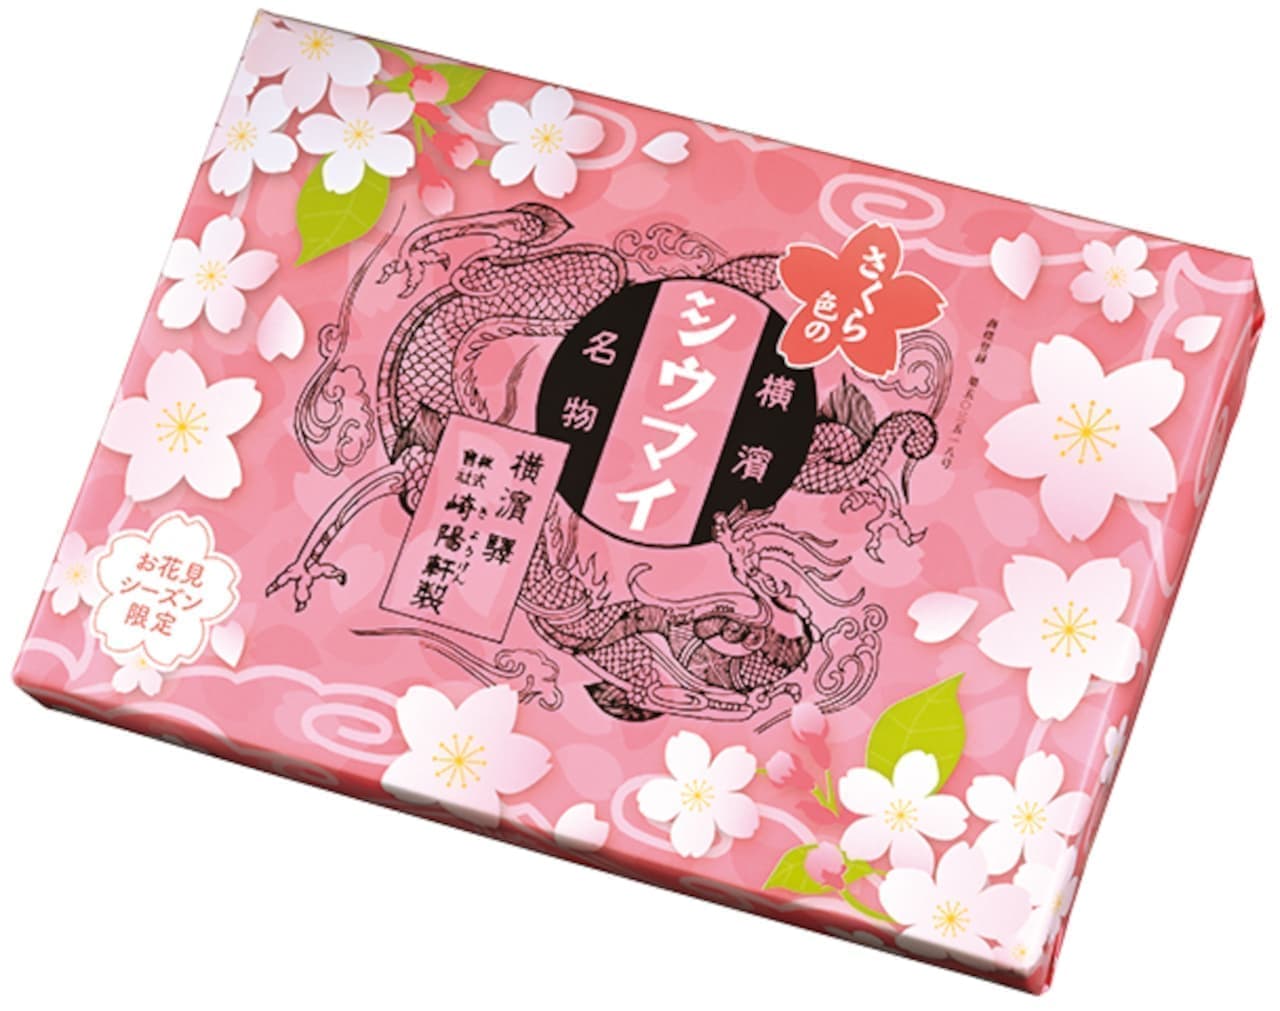 Sakiyo-ken "Hanami Season Limited Sakura Color Old-Fashioned Shiomai 30-packs" package